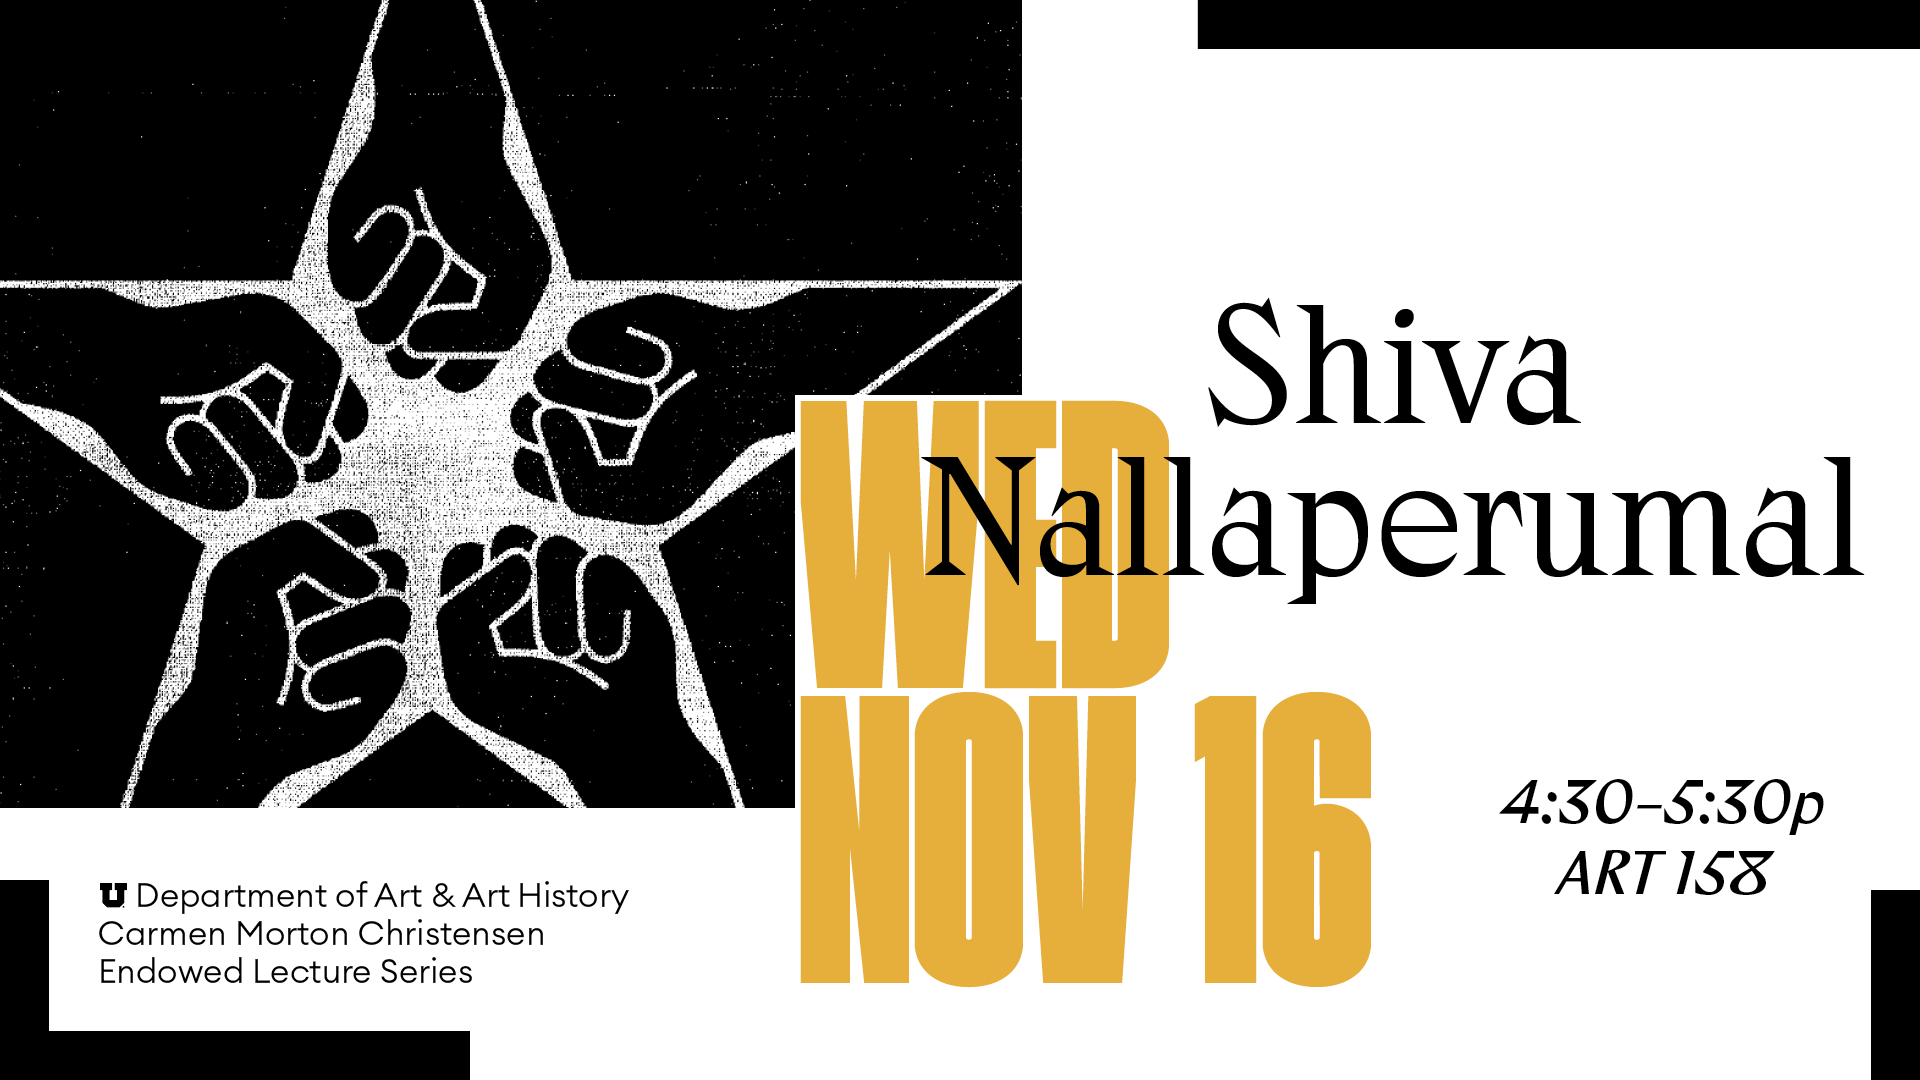 Shiva Nallaperumal artist talk